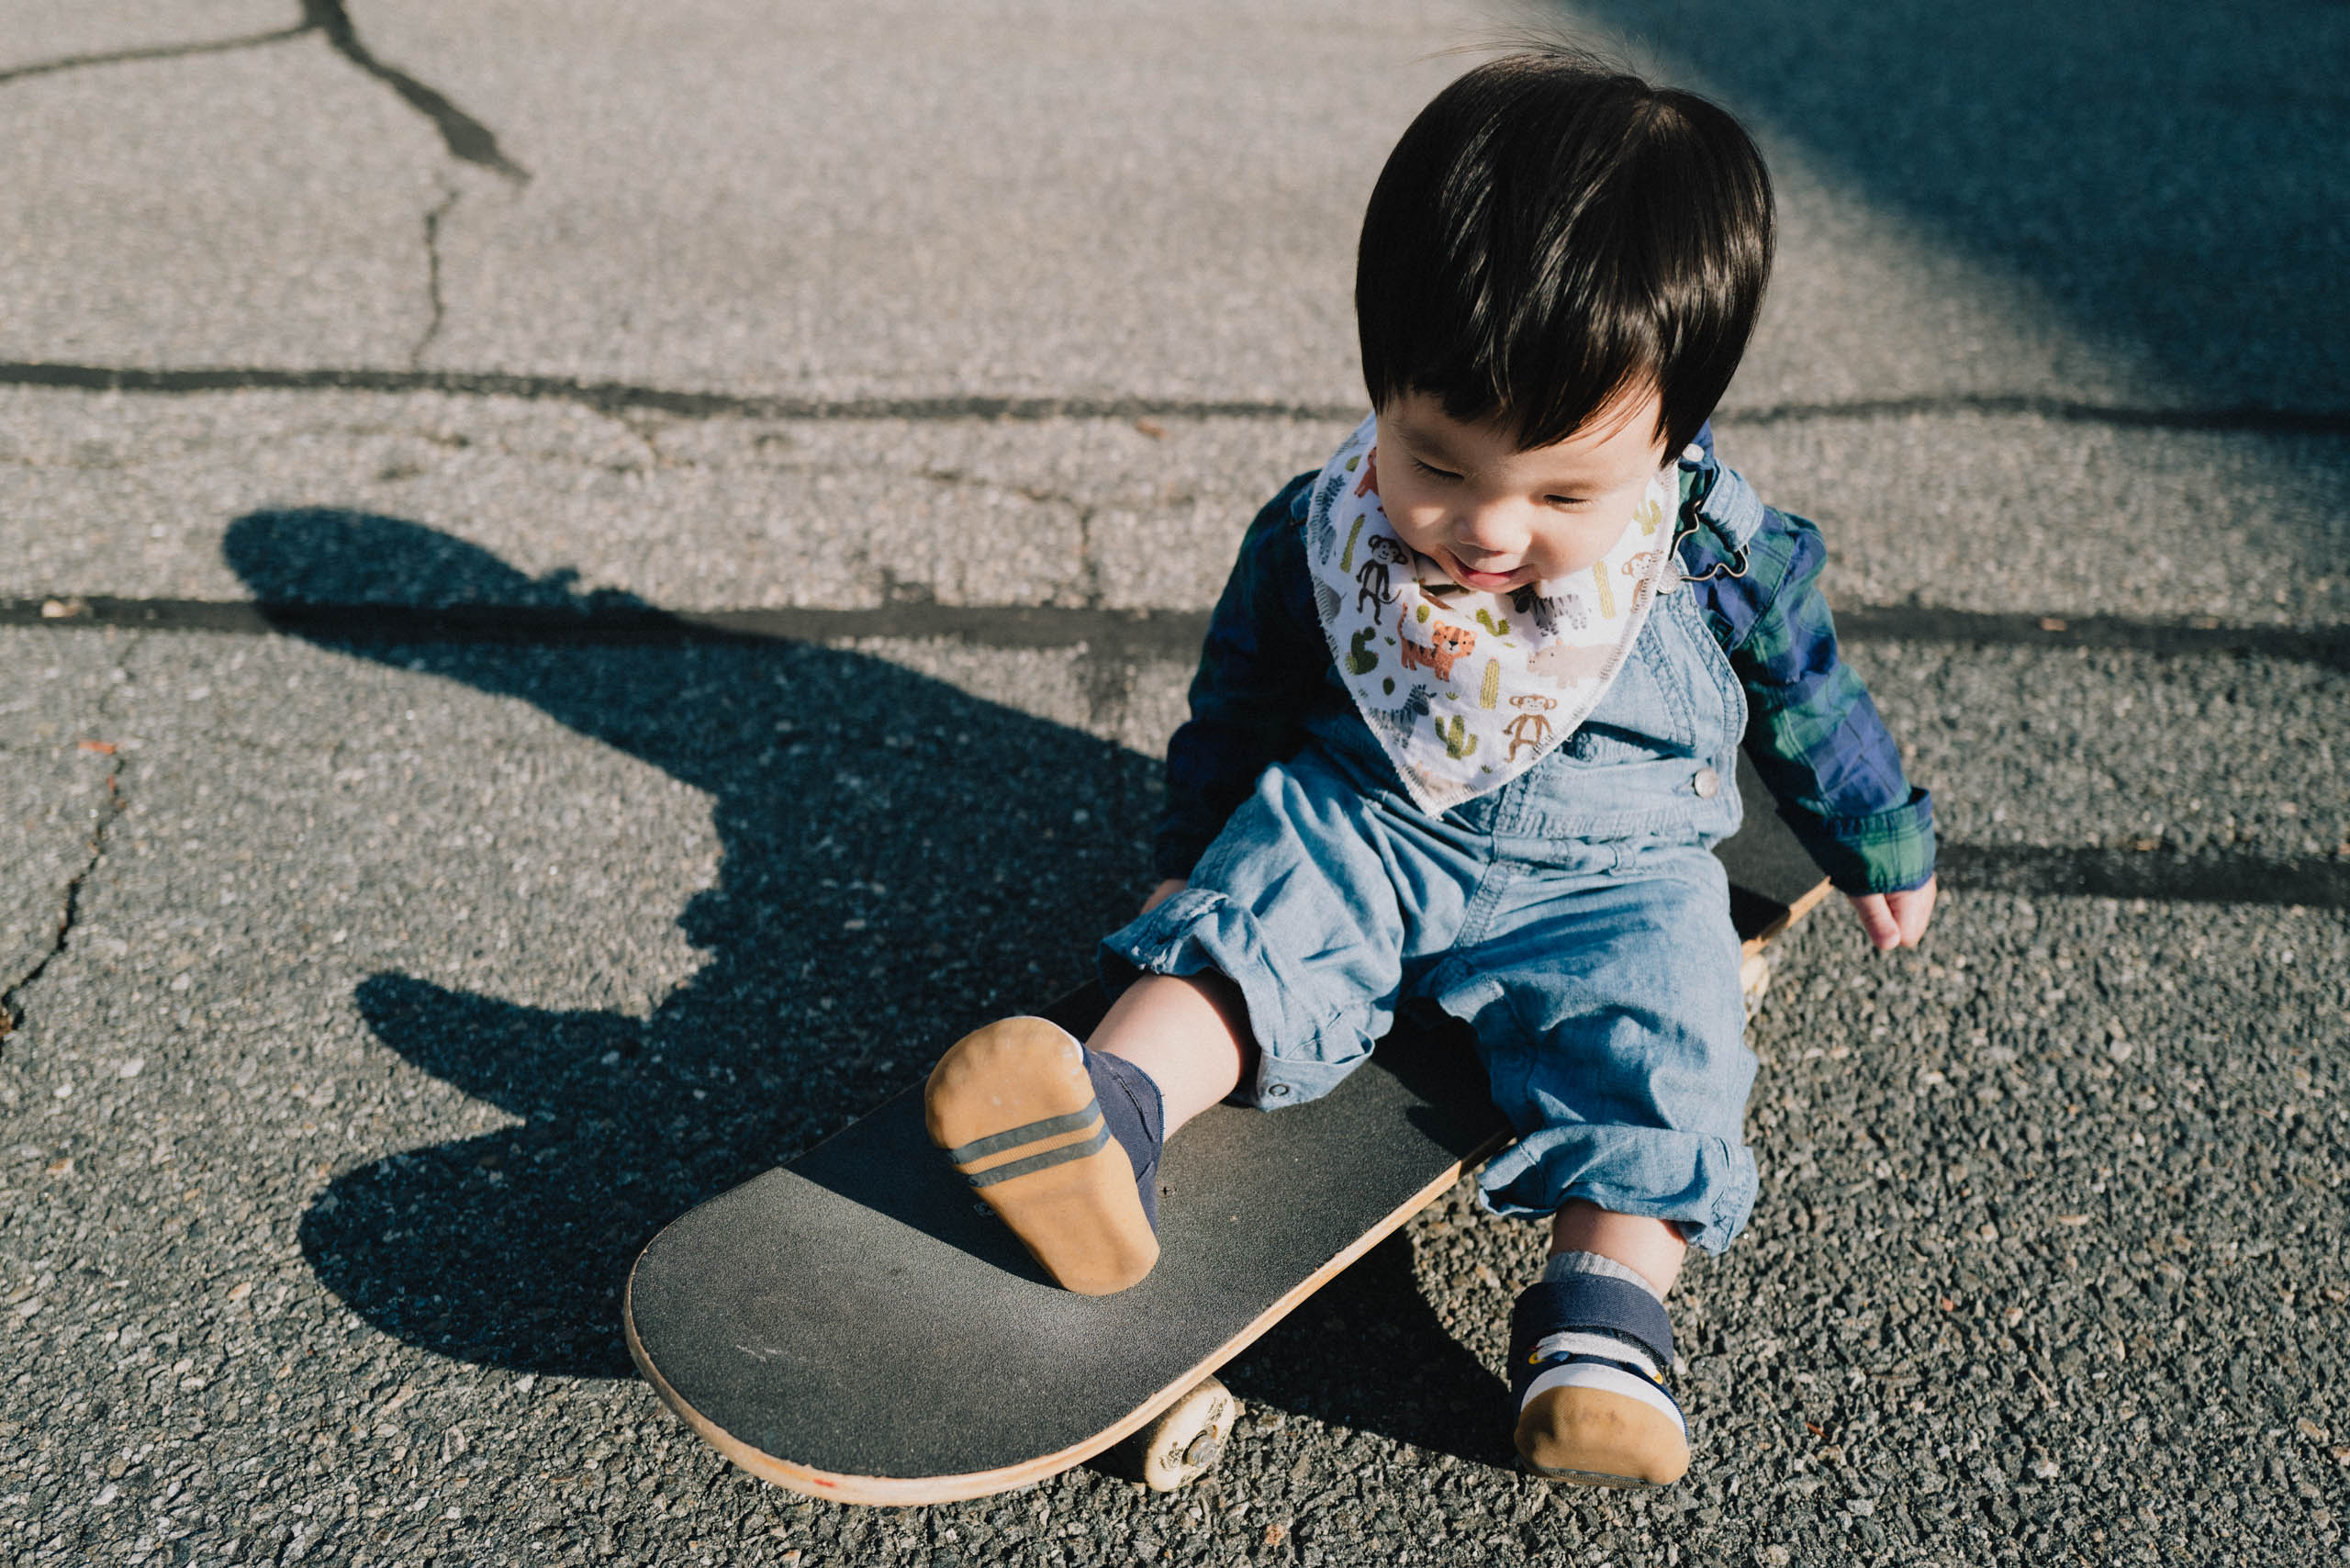 Baby J on a skateboard.